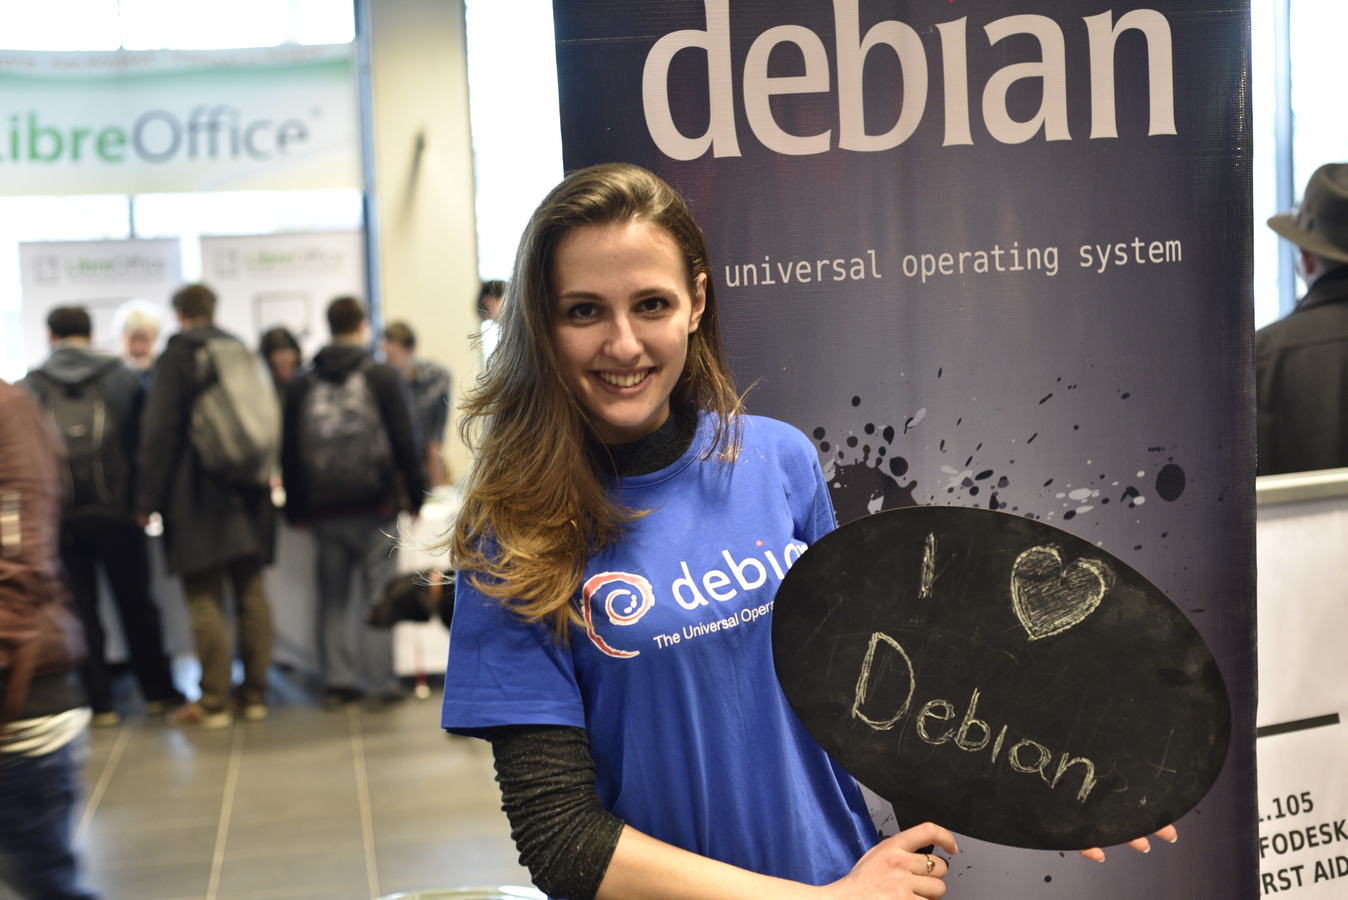 I love Debian